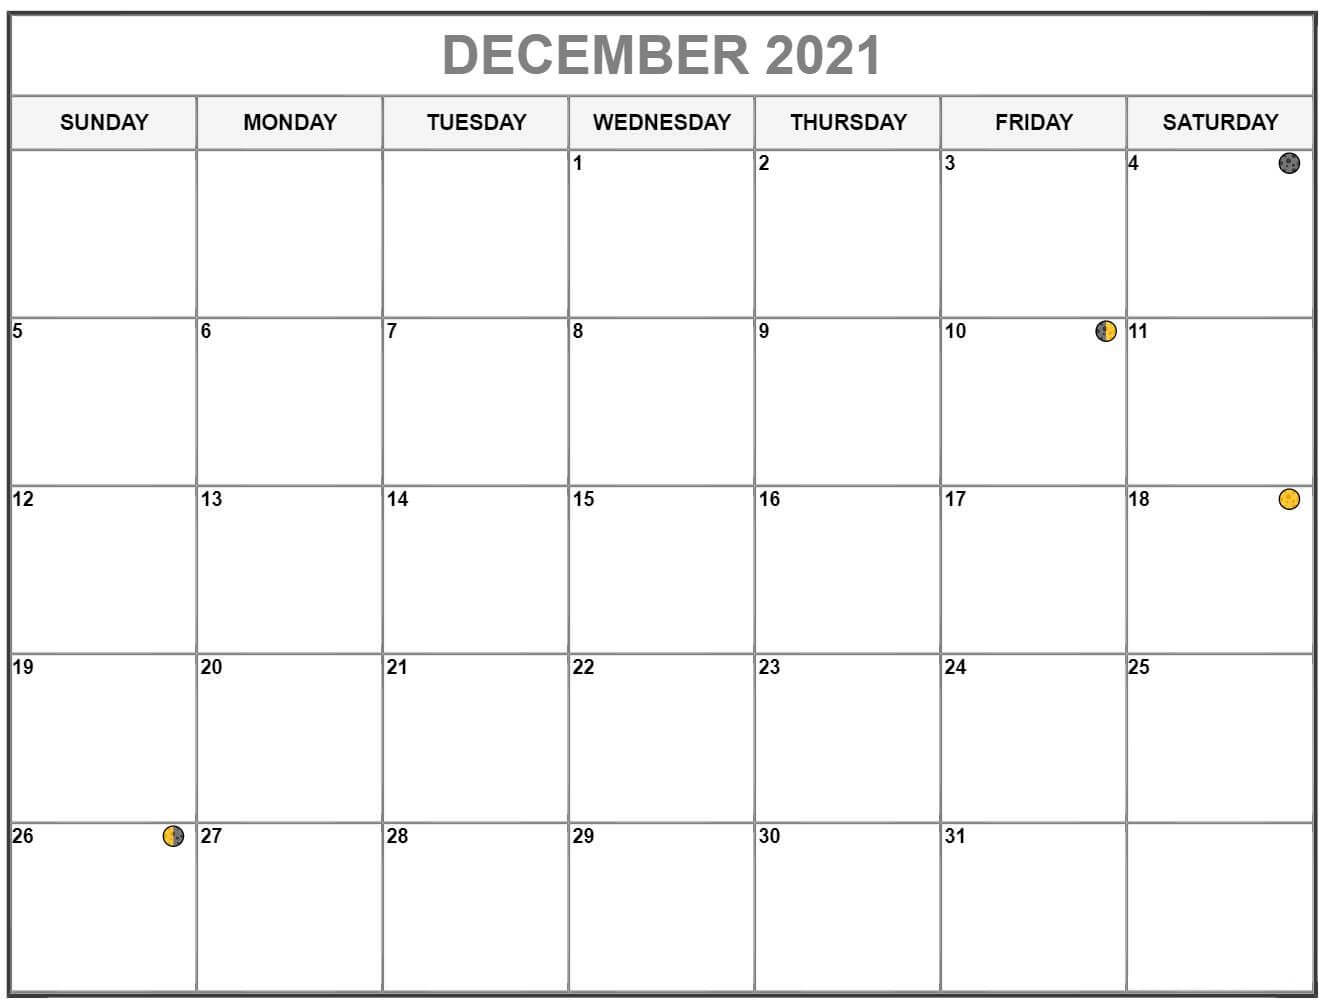 December 2021 Lunar Calendar